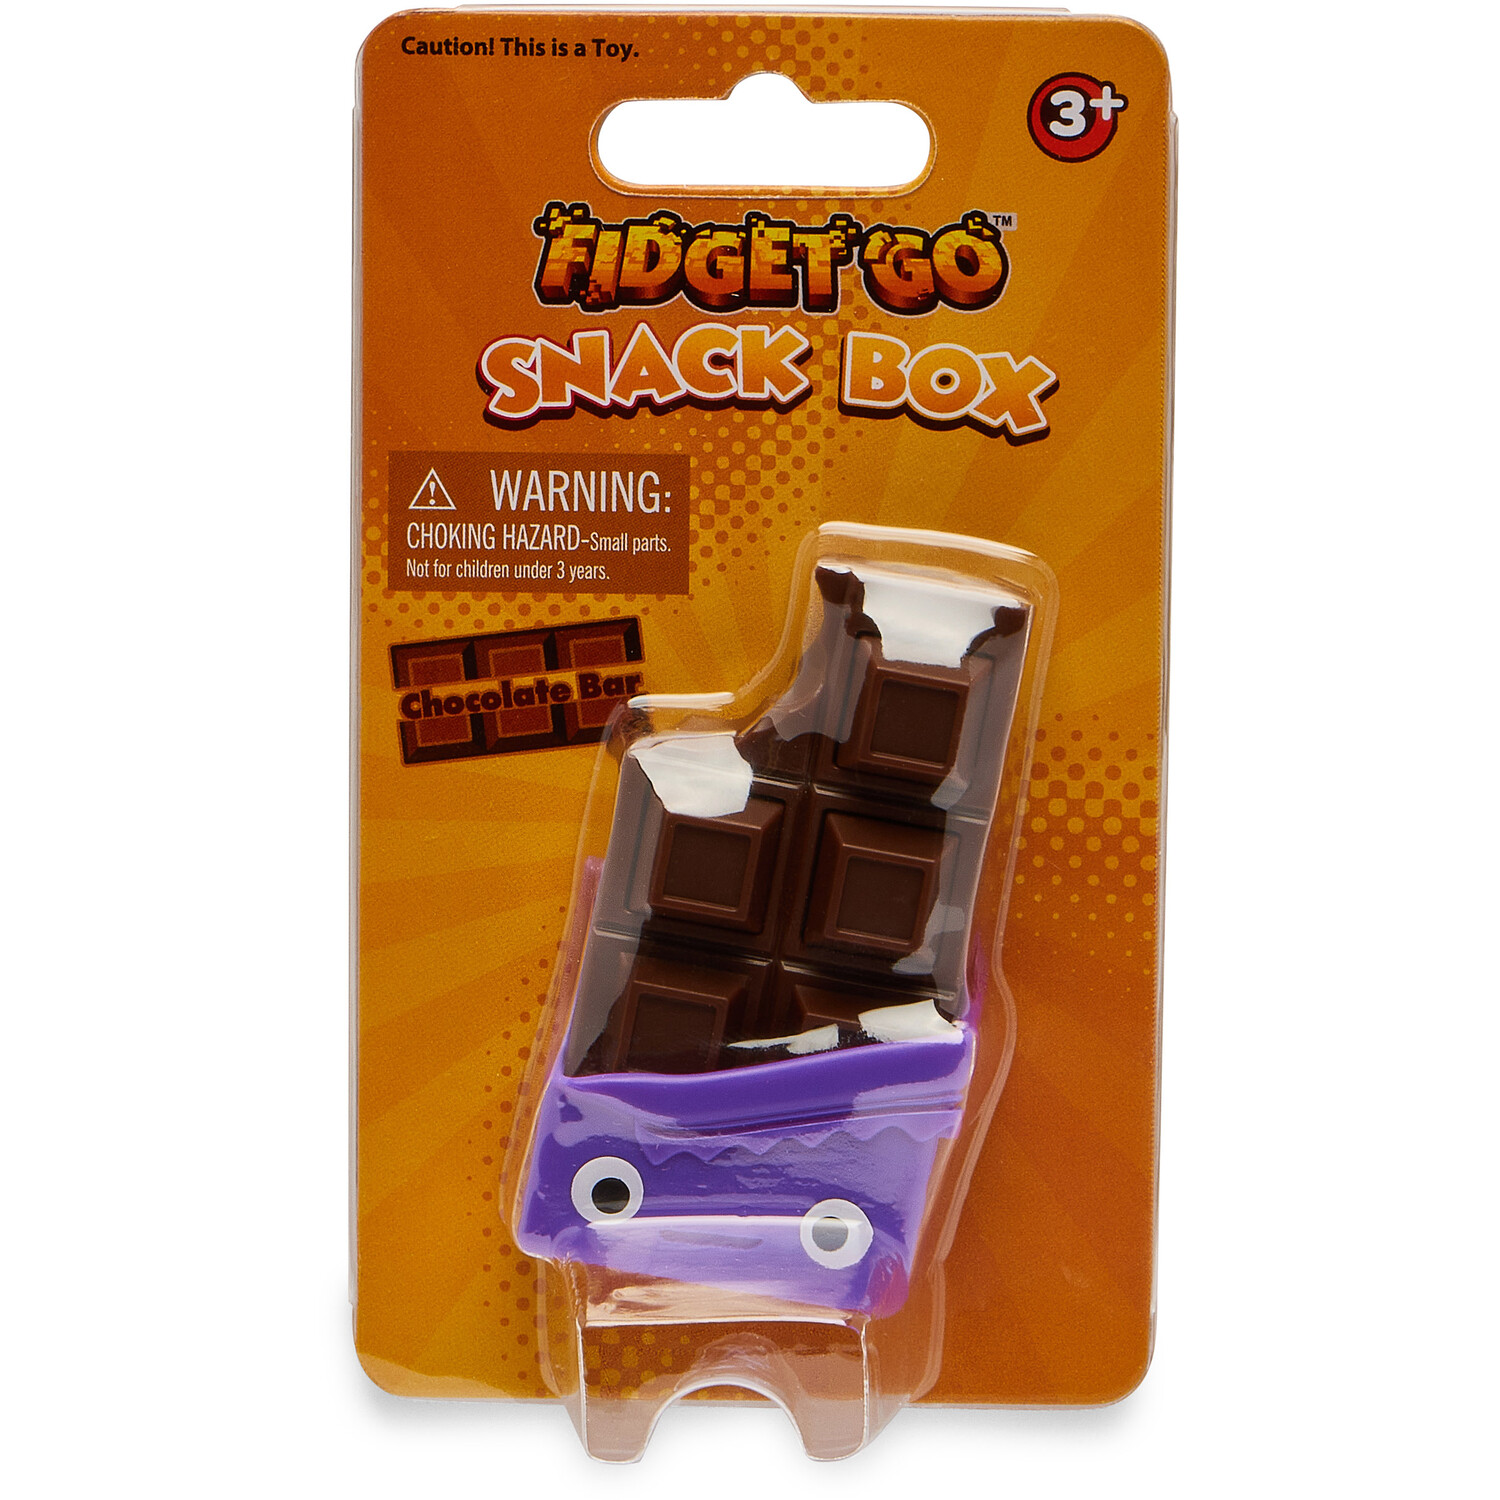 Fidget Go Snack Box Image 20